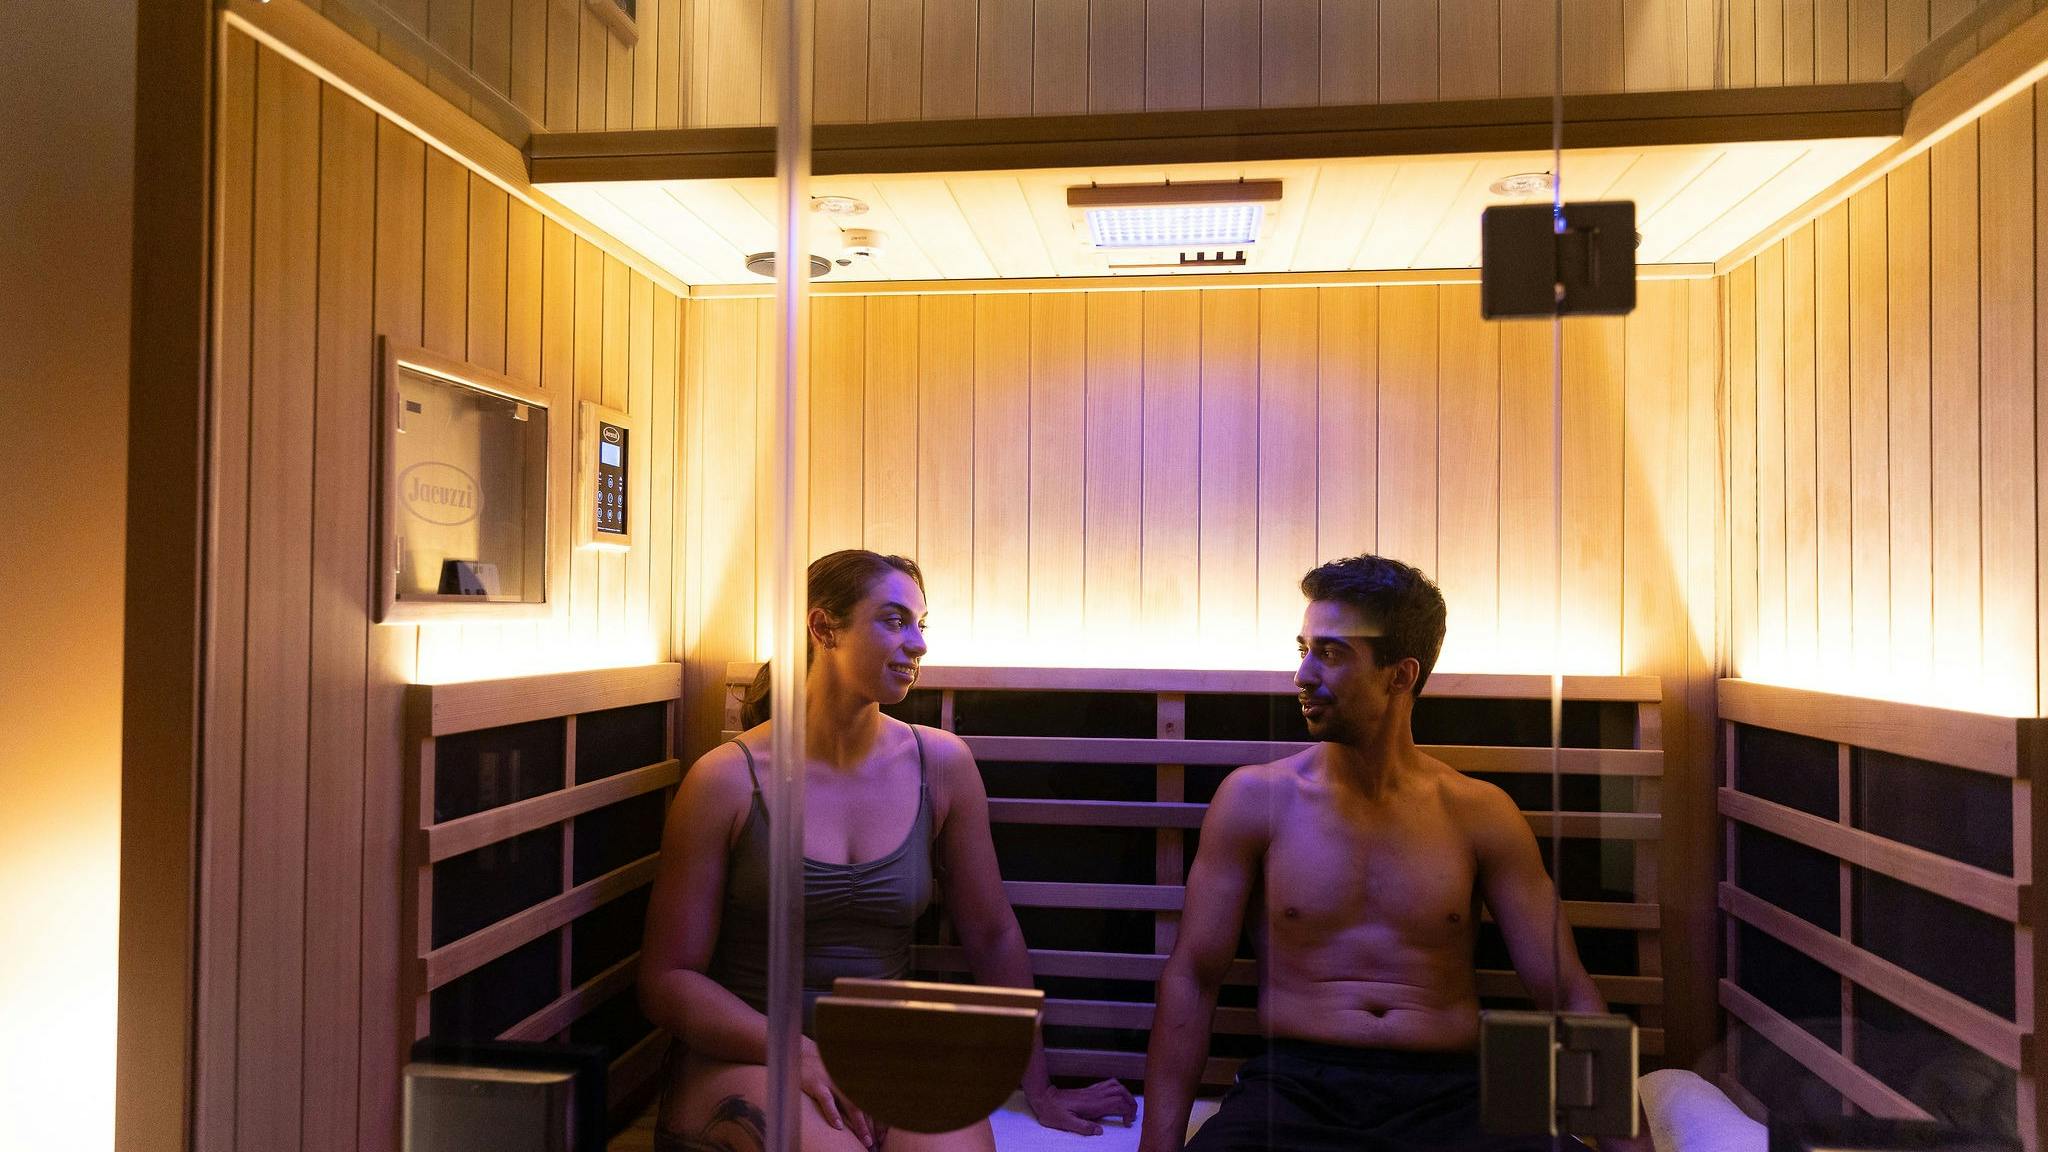 Infrared Sauna as a Couple